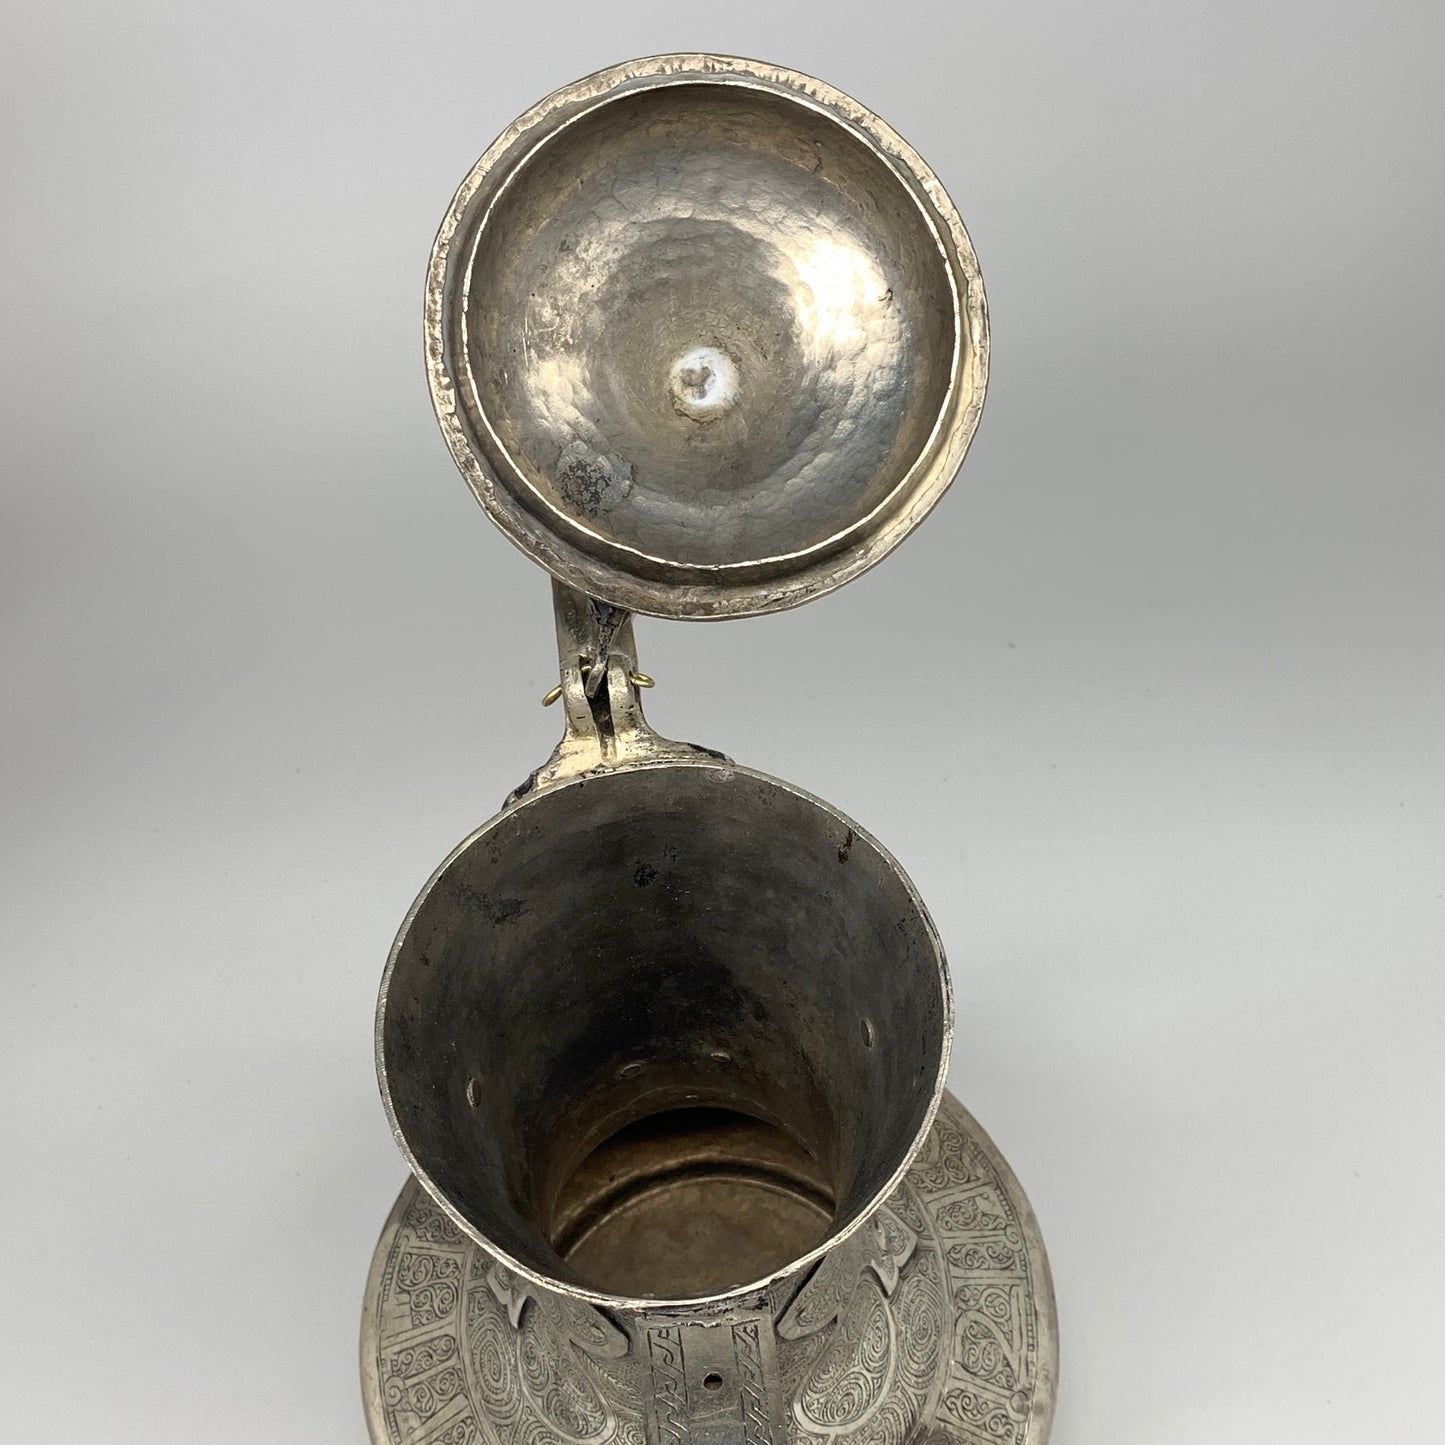 1550g,15"x8.5" Handmade Antique Pitcher Ewer Brass/Copper @Afghanistan, P147